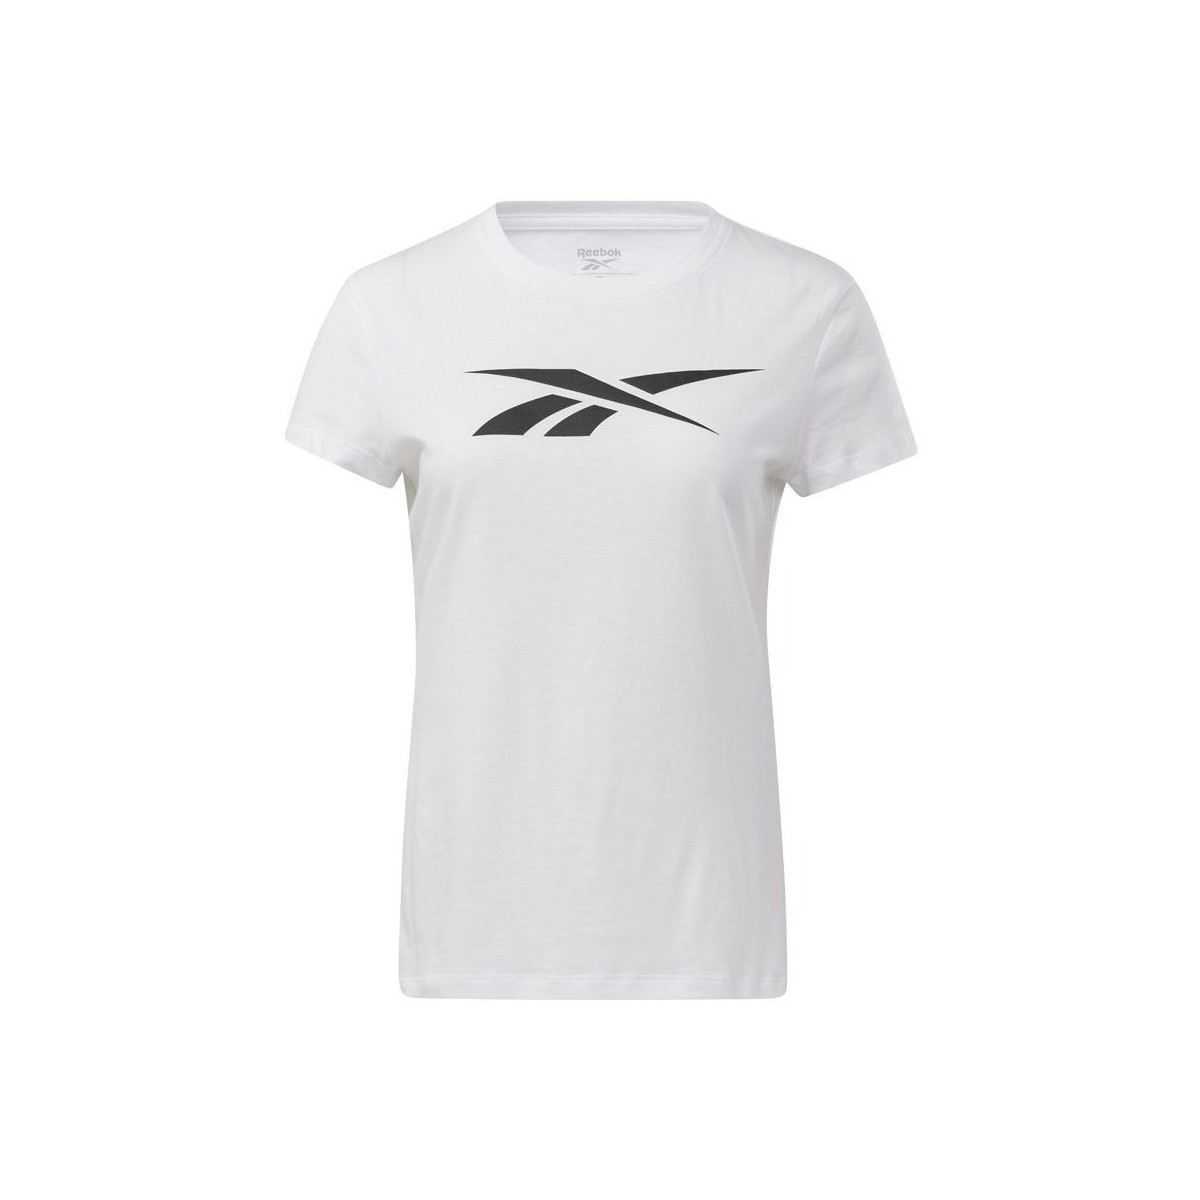 Textil Mulher T-Shirt mangas curtas Reebok Sport Training Essentials Vector Graphic Branco